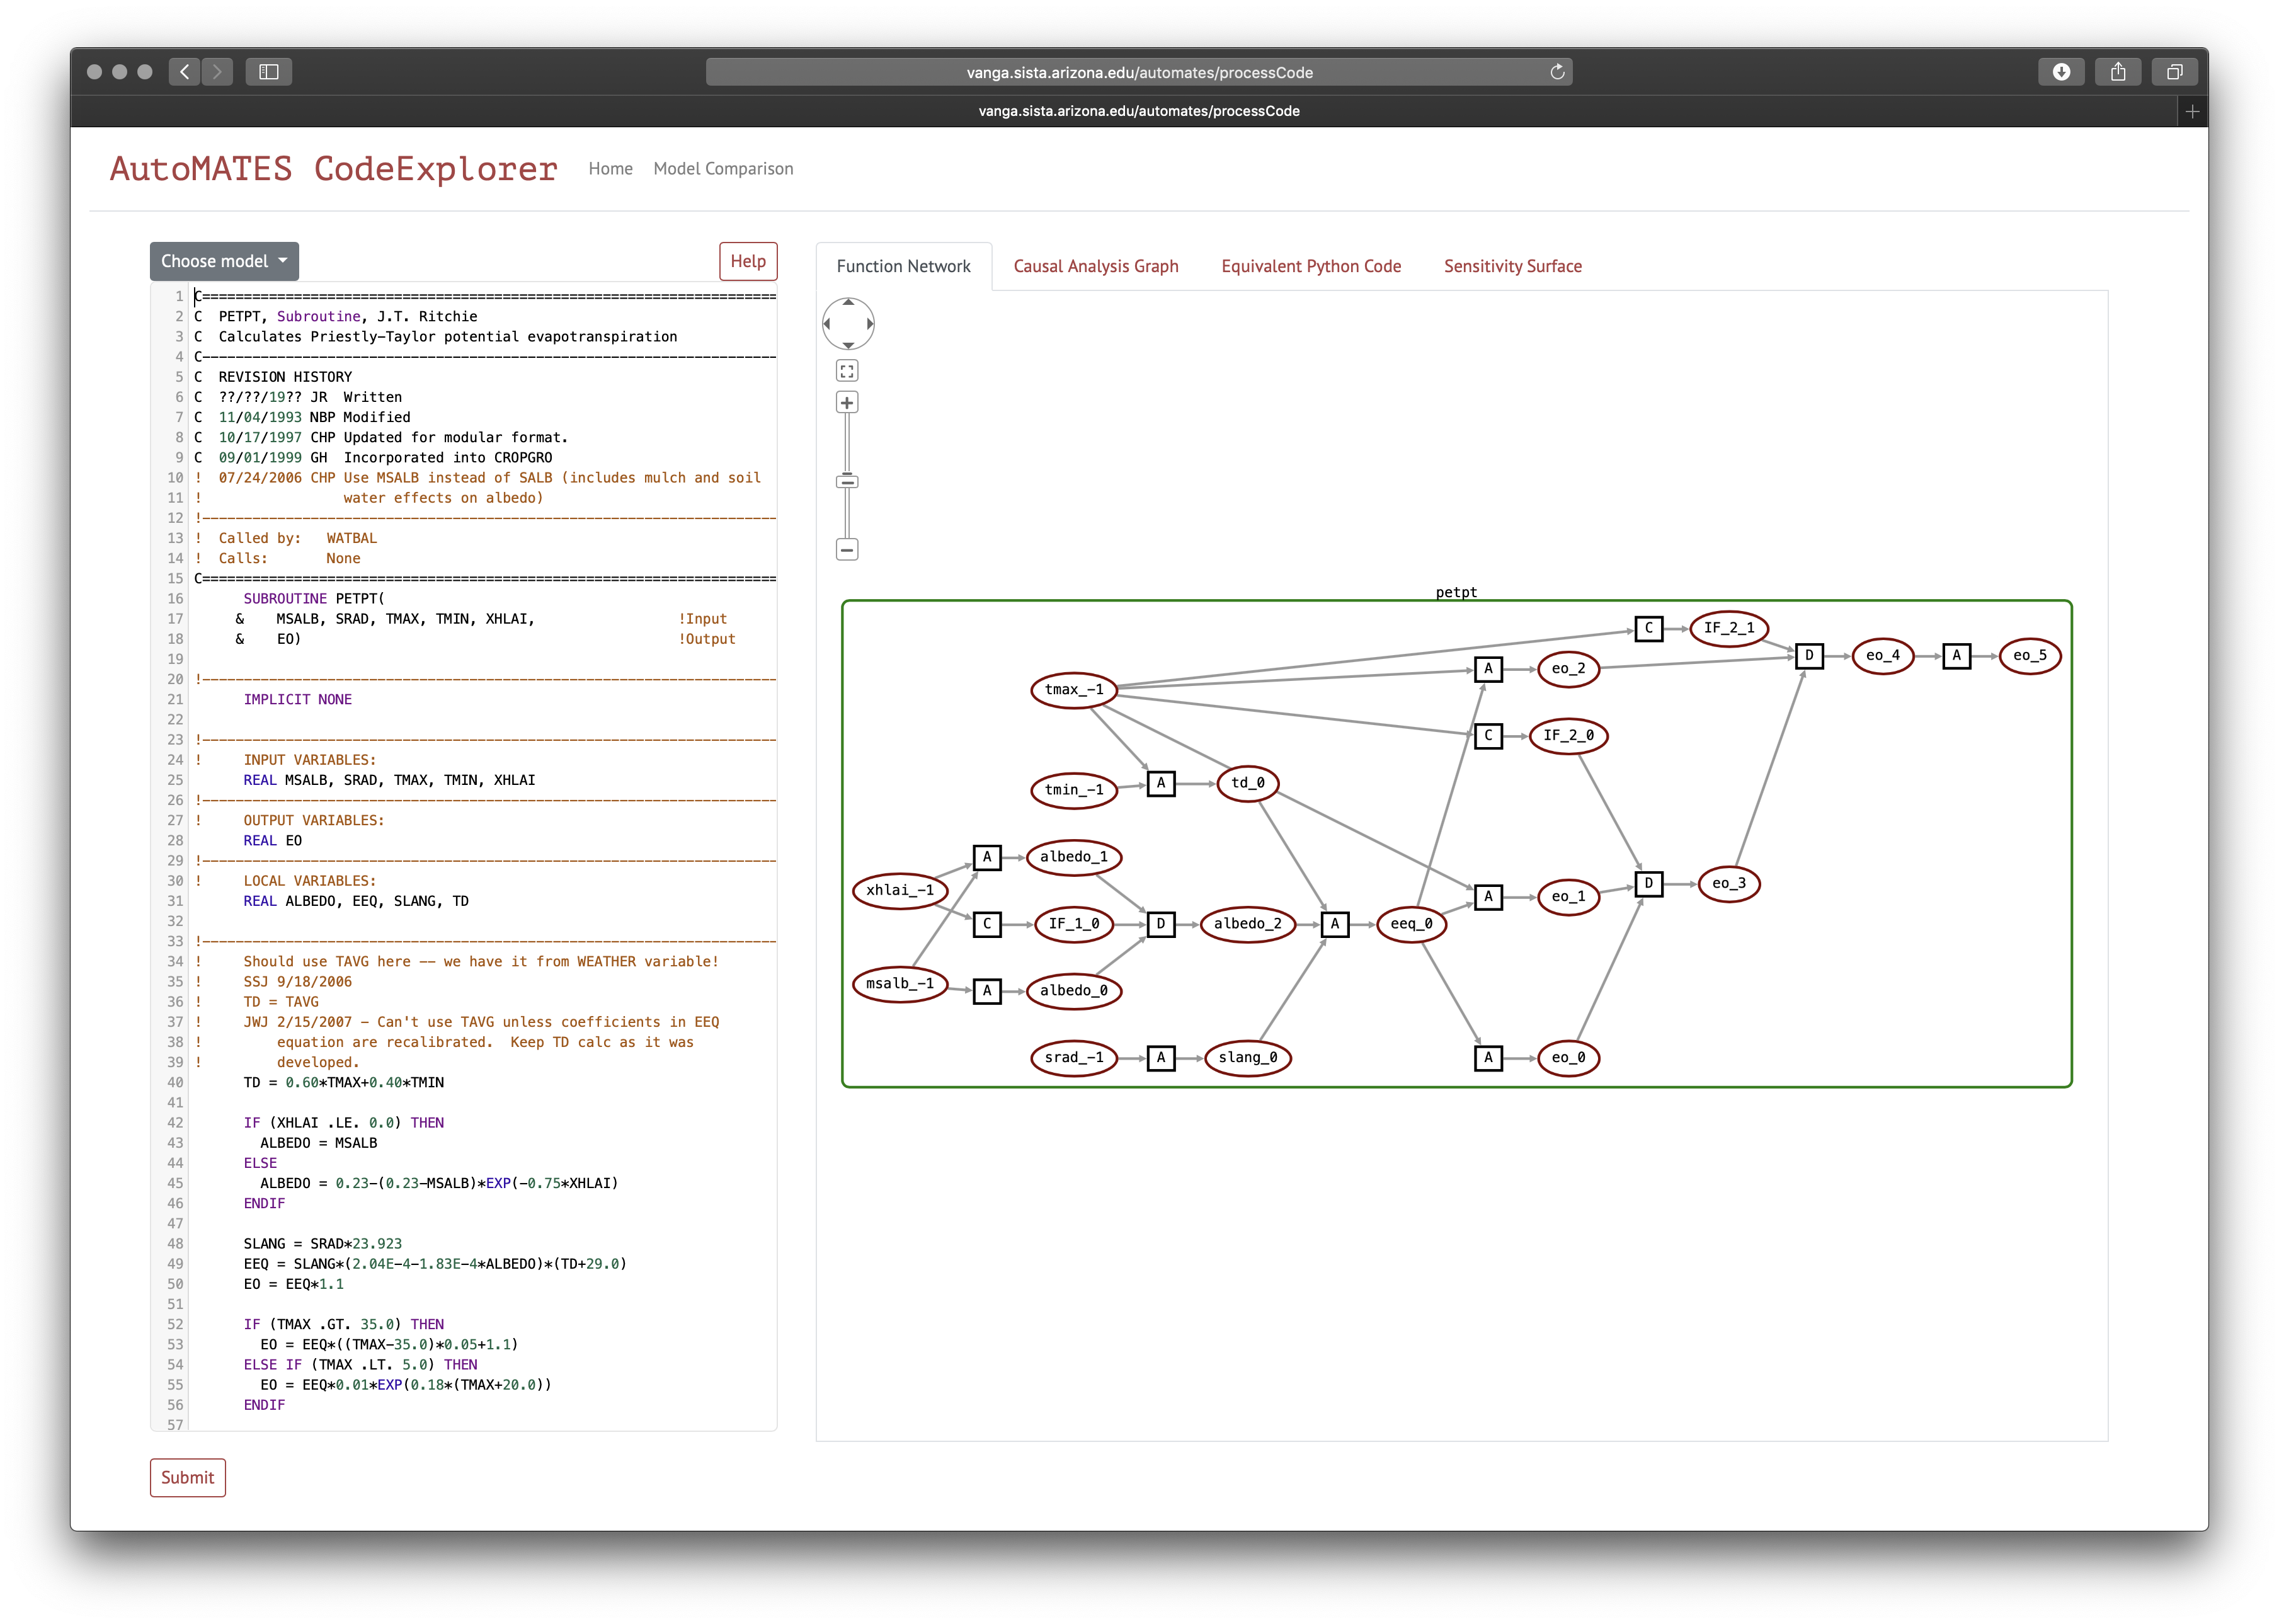 Screenshot of AutoMATES CodeExplorer interface